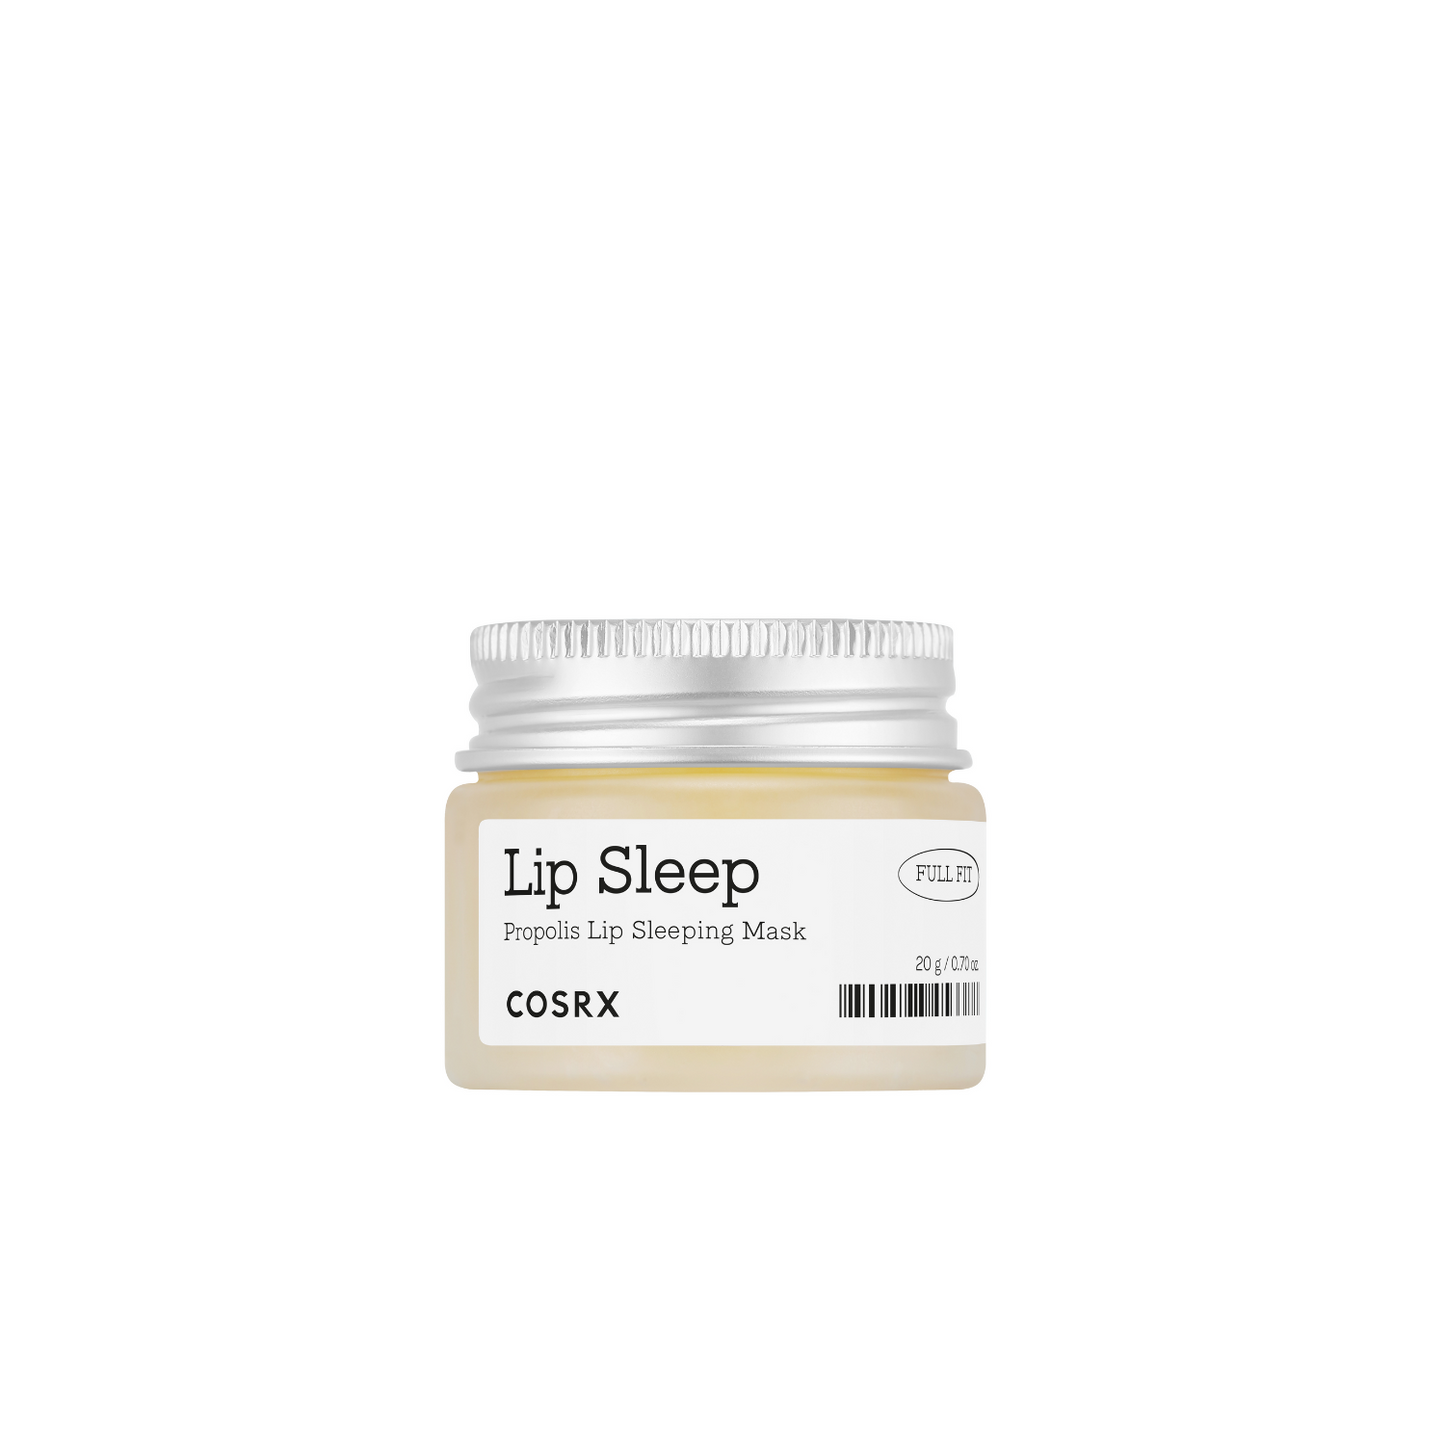 COSRX Full Fit Propolis Lip Sleeping Mask